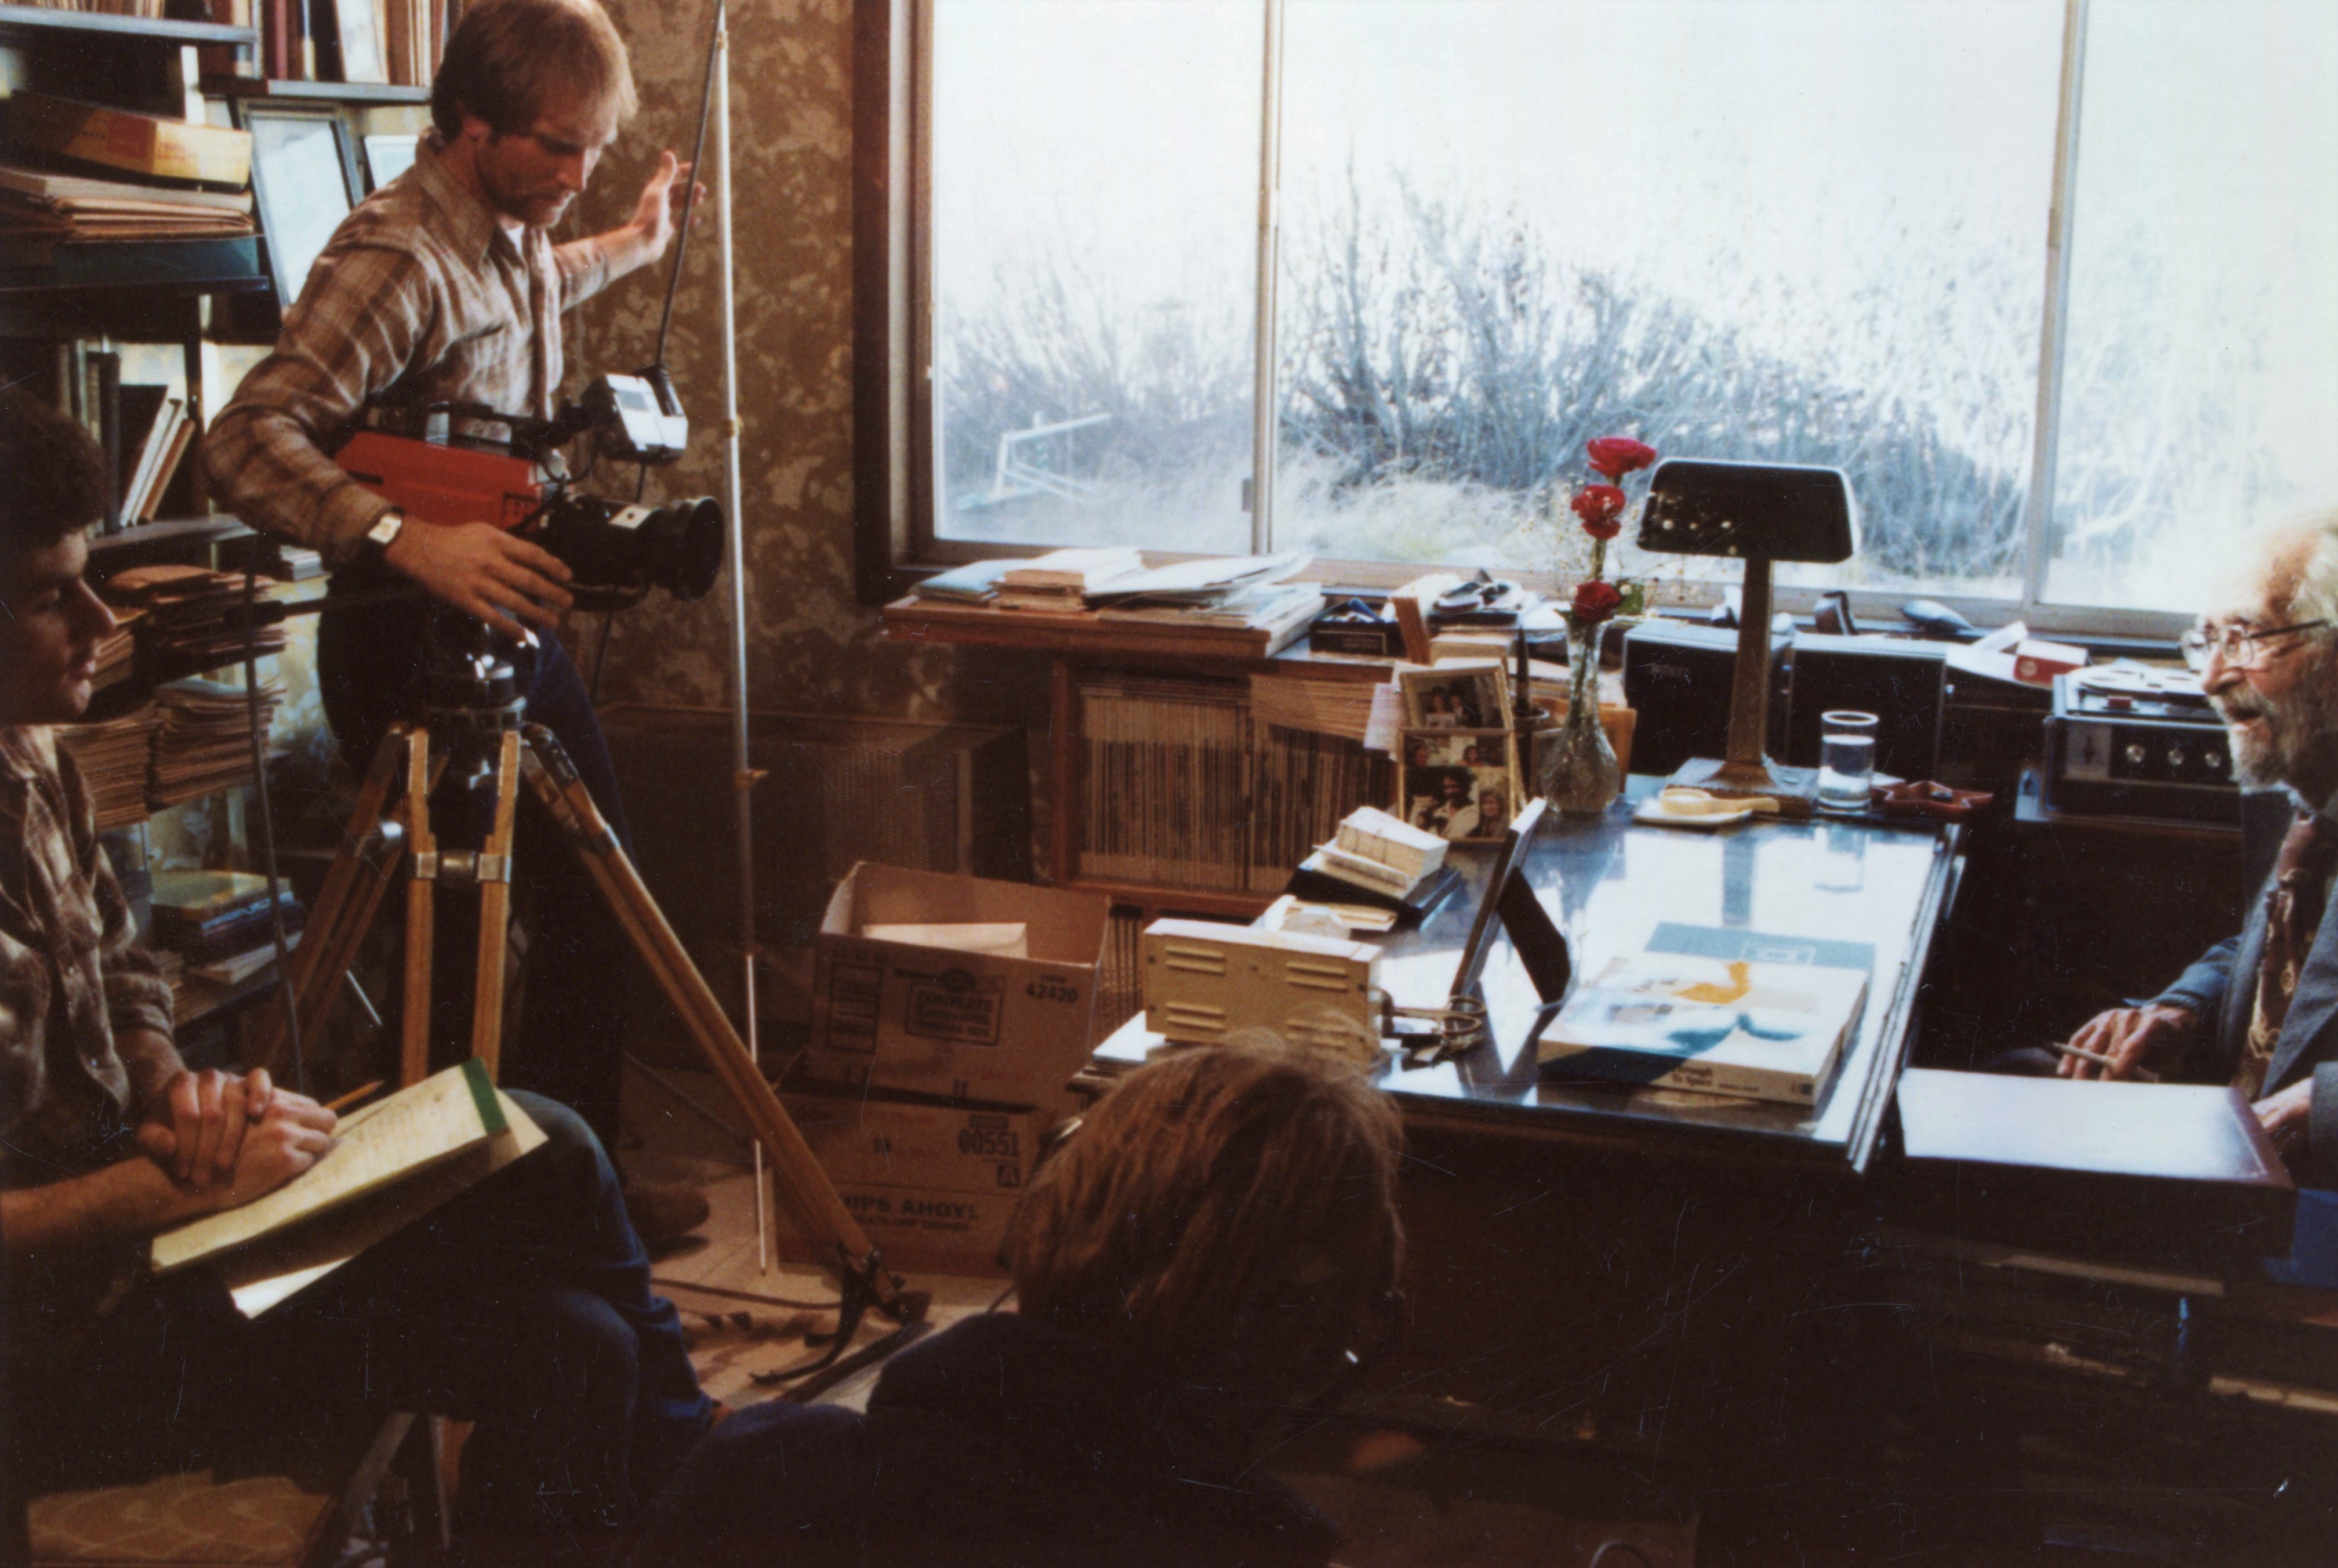 1984-Feb FMW home, FMW, video crew